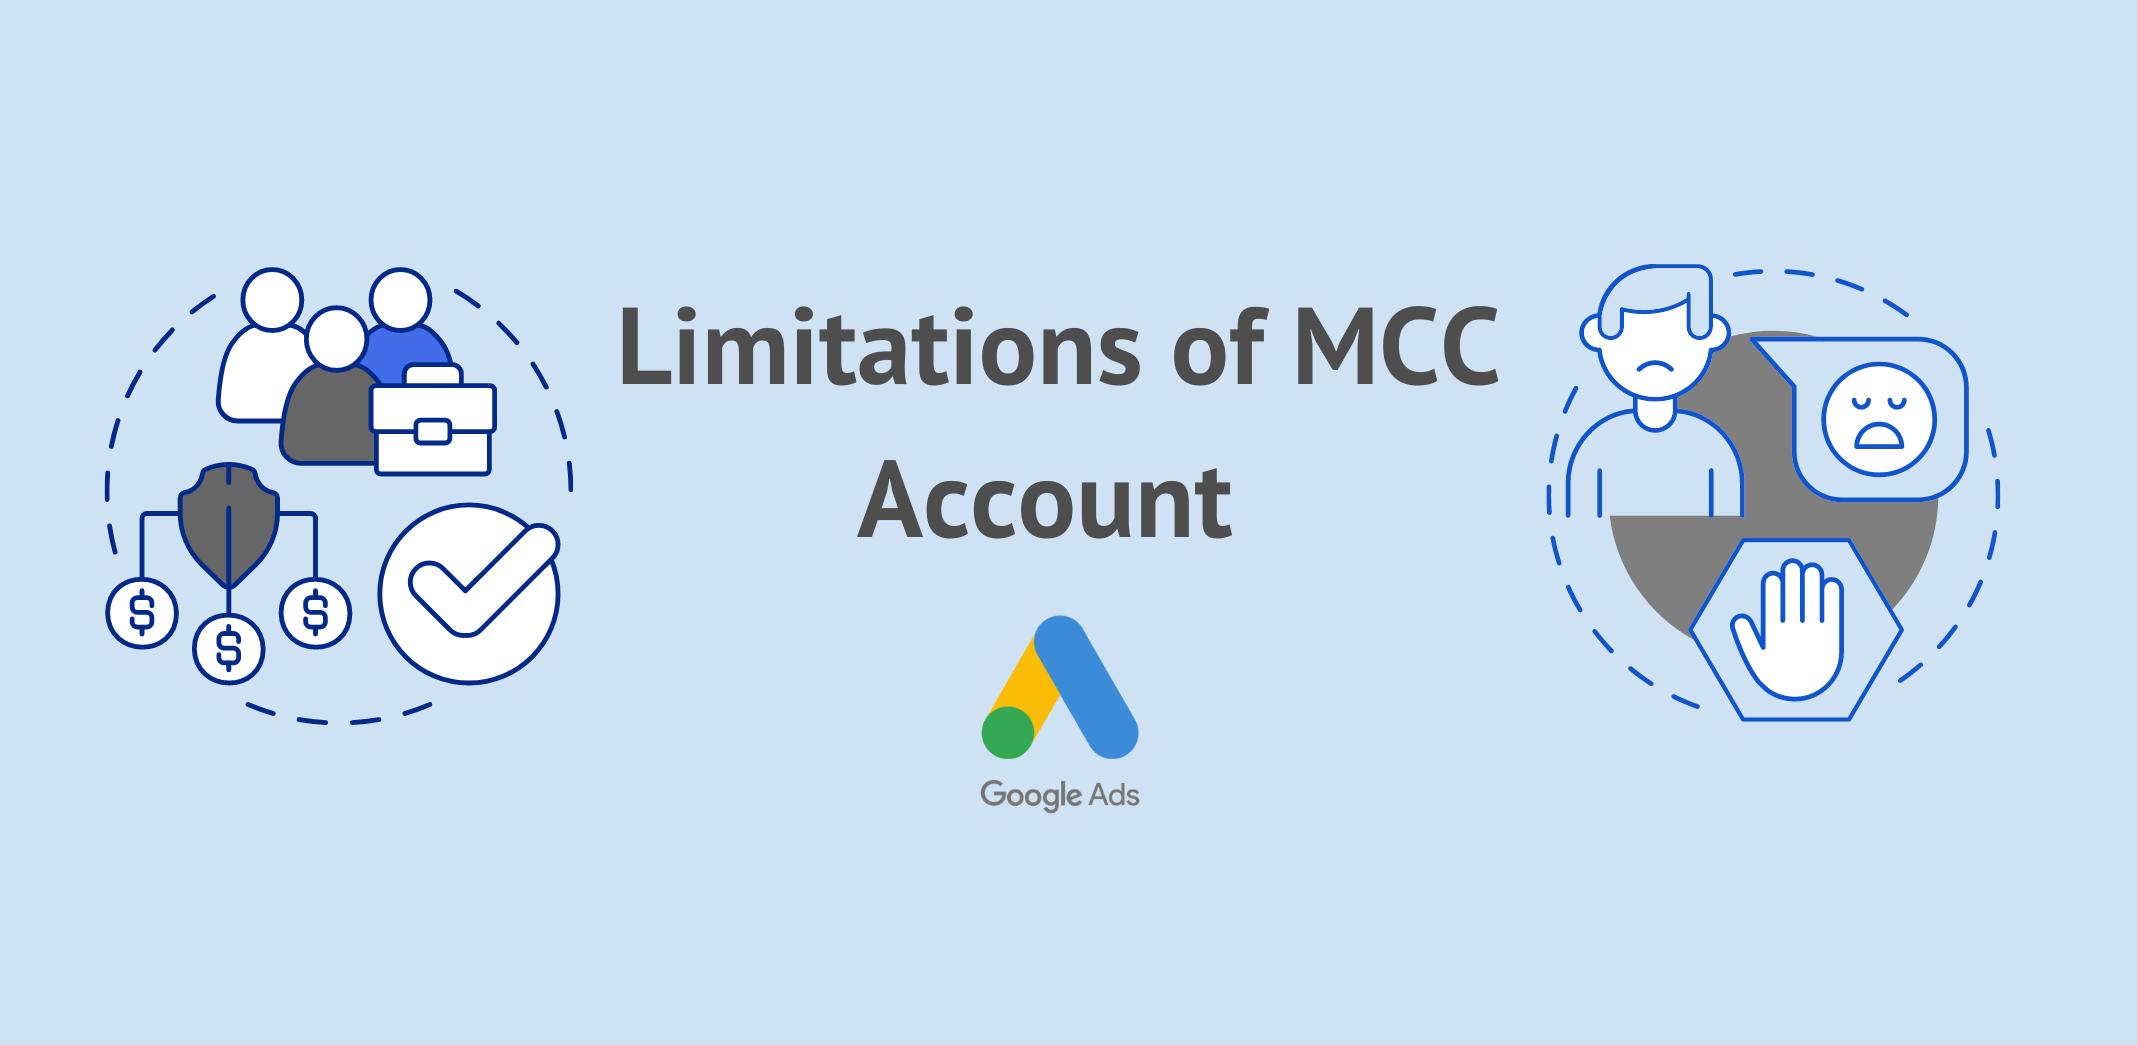 Limitations of MCC Account